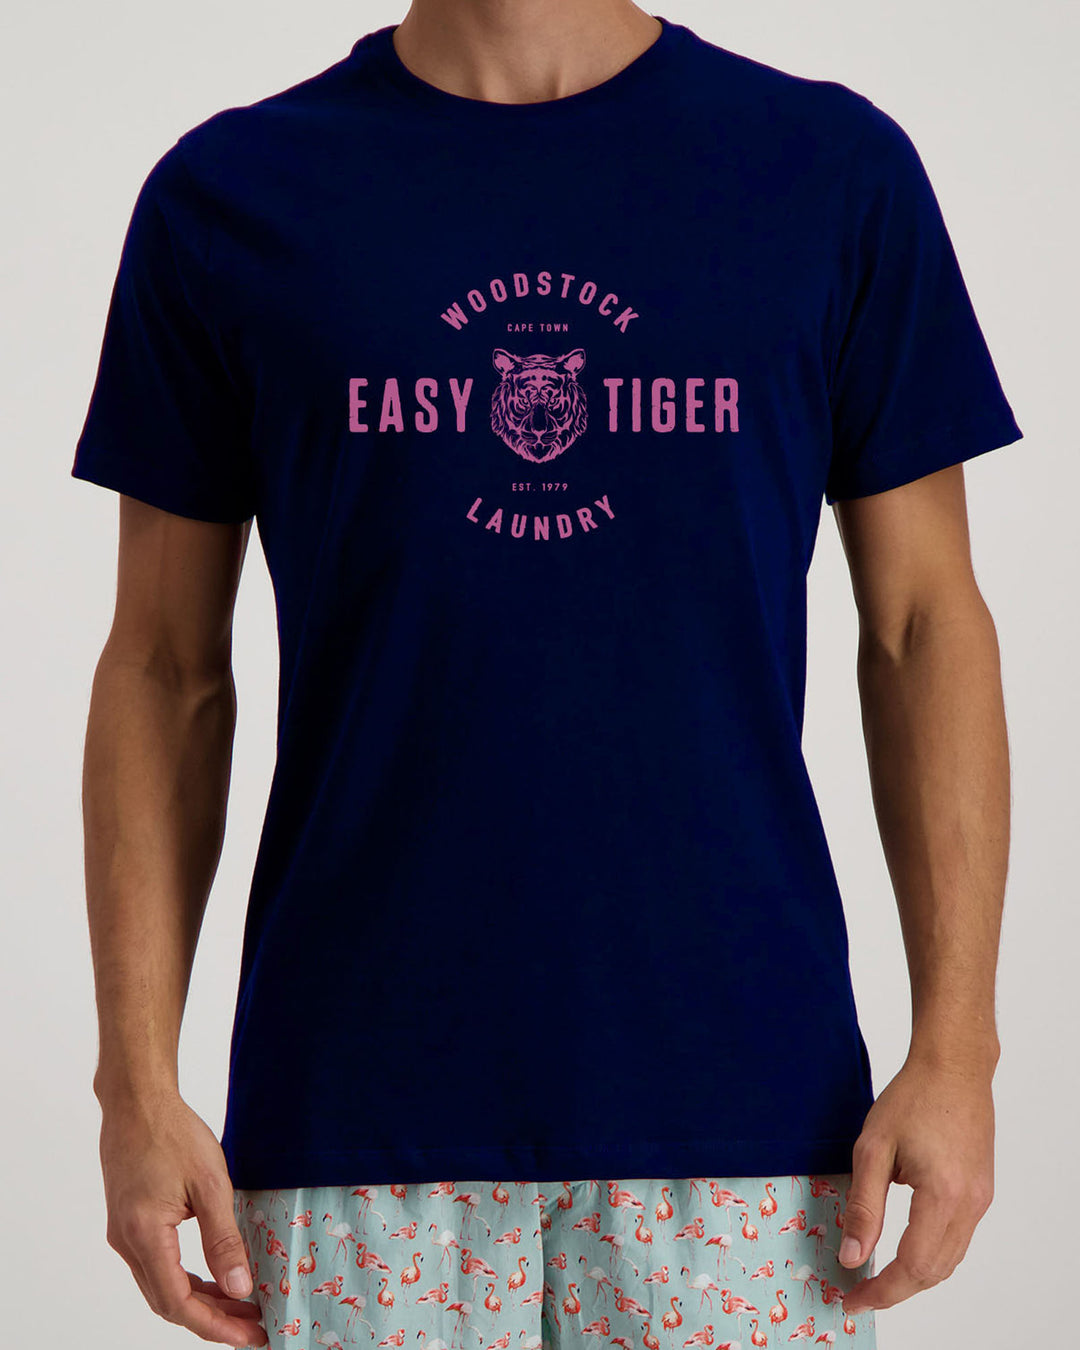 Mens T-Shirt Navy-Easy Tiger - Woodstock Laundry SA